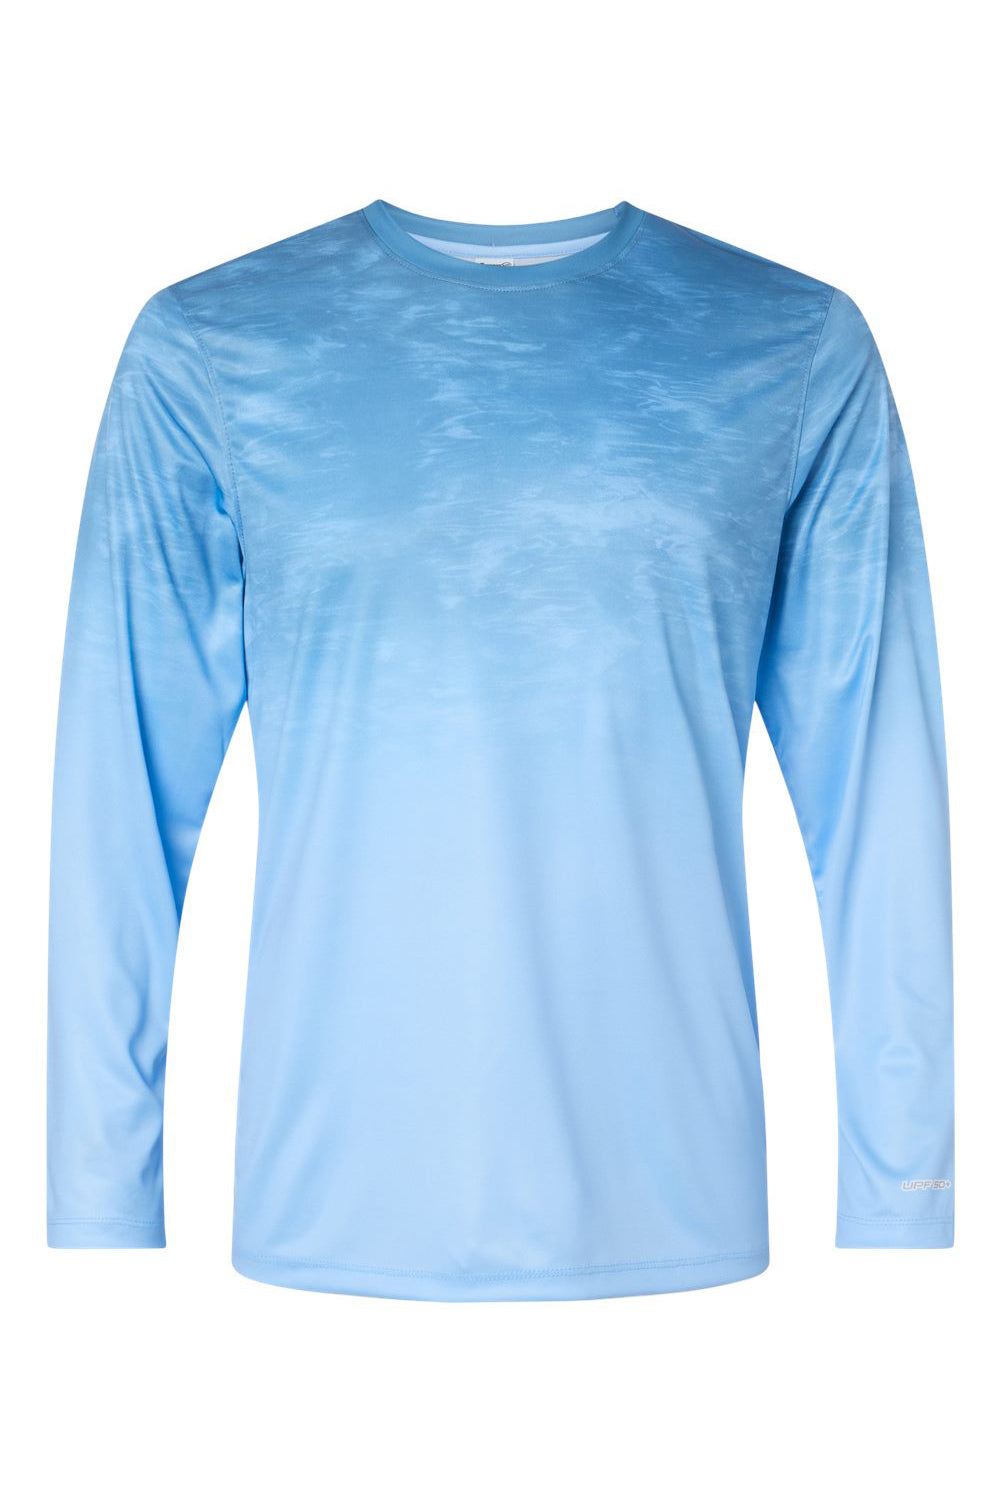 Paragon 229 Mens Montauk Oceanic Fade Performance Long Sleeve Crewneck T-Shirt Blue Mist Fade Flat Front